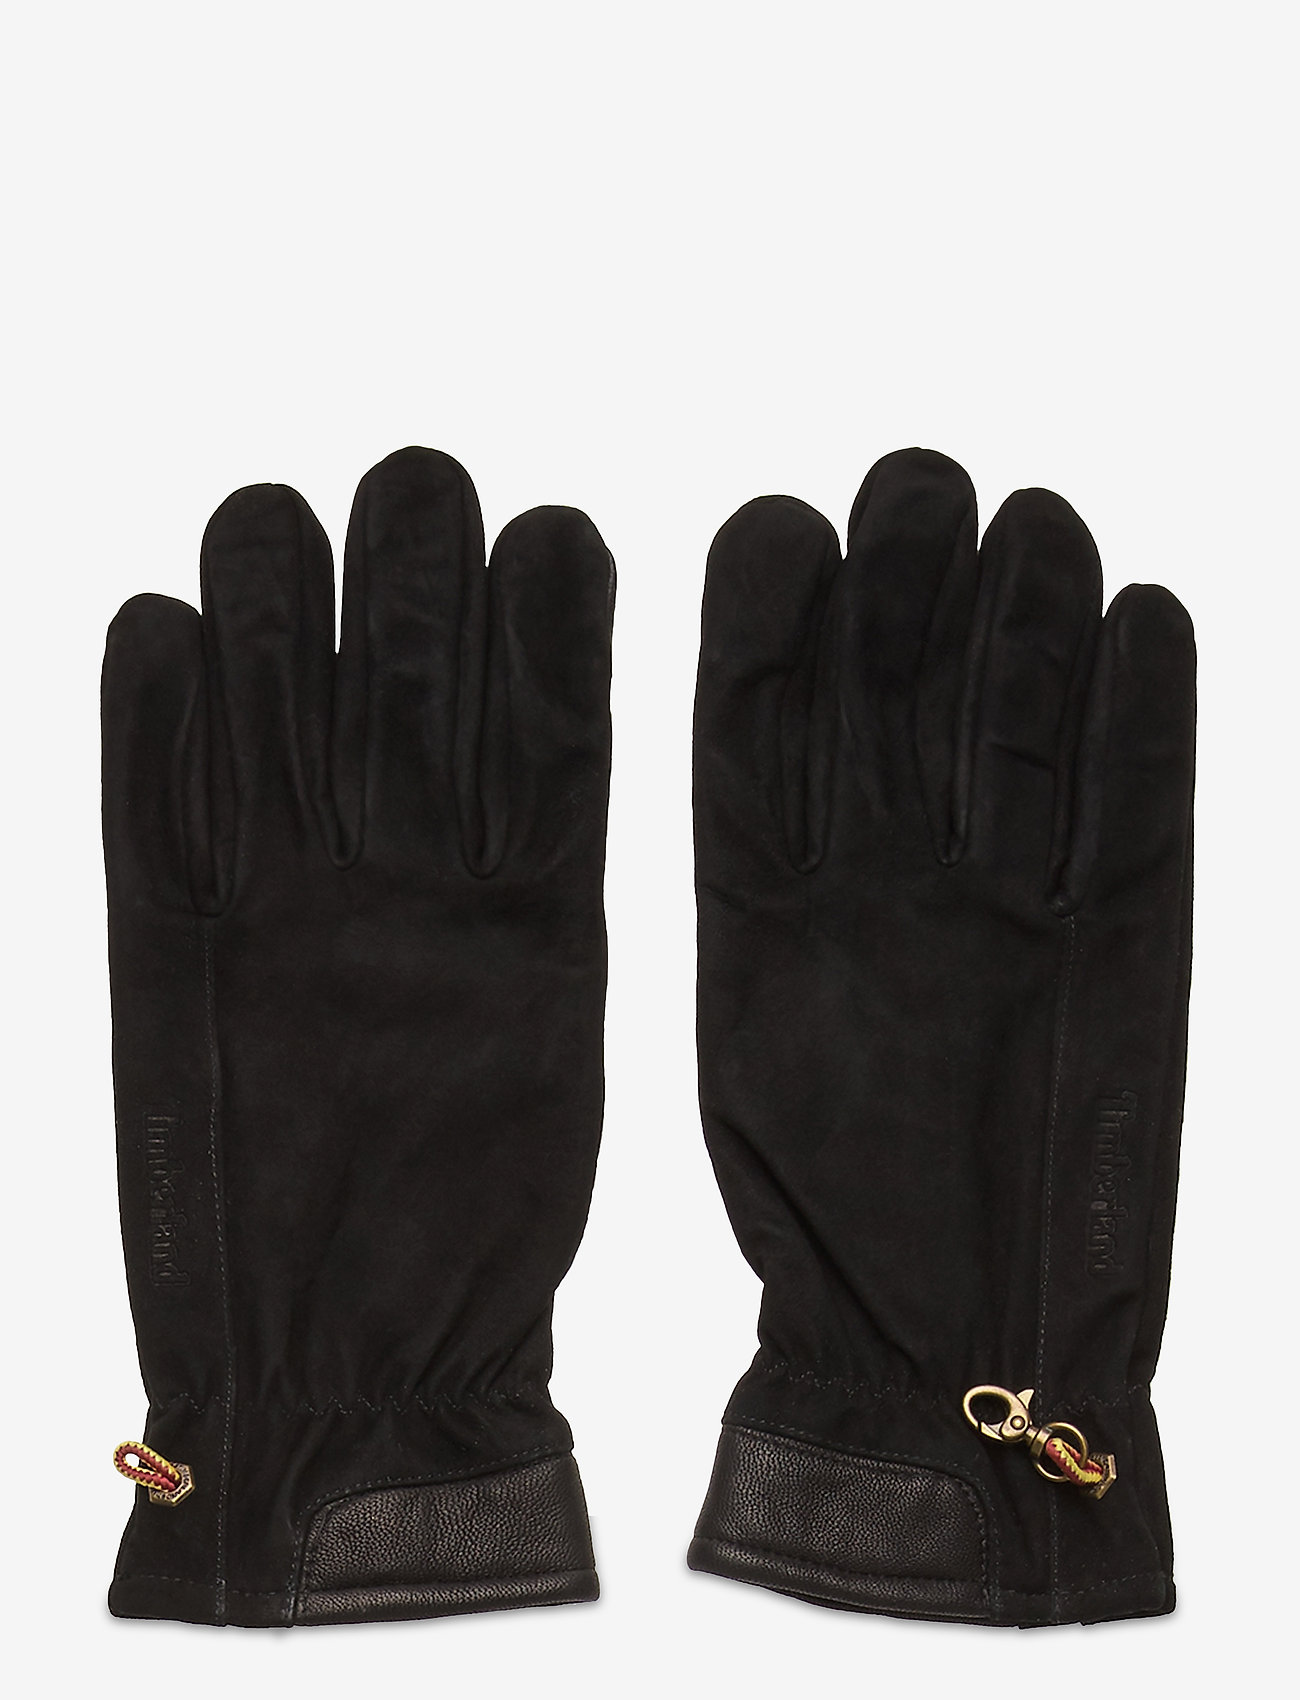 Timberland - Winter Hill Nubuck Glove BLACK - birthday gifts - black - 0